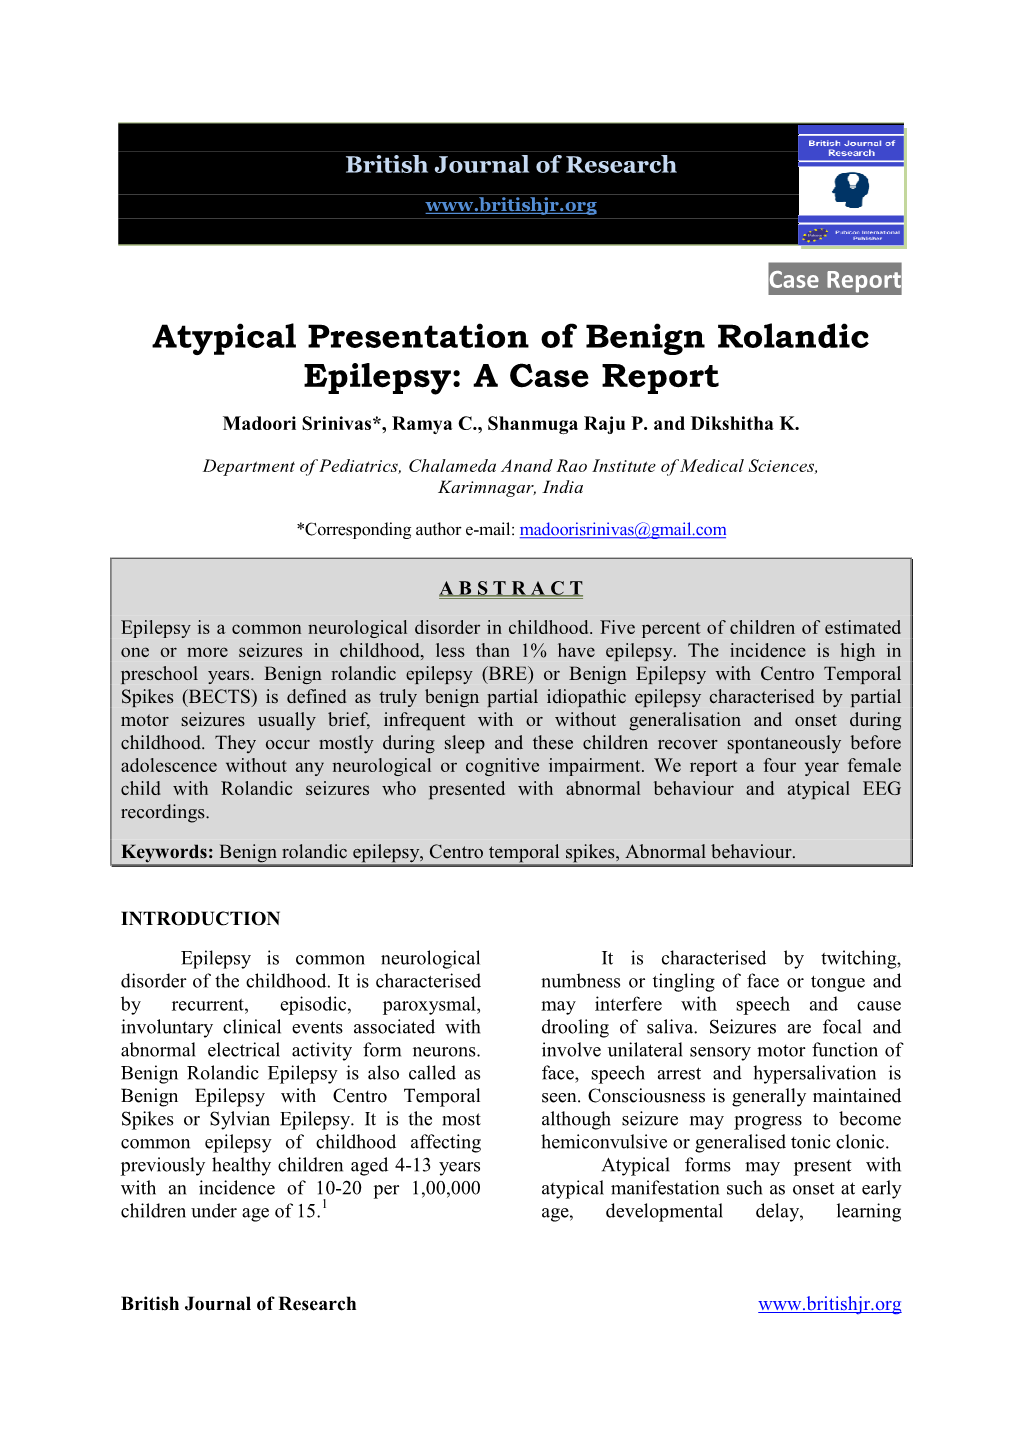 Atypical Presentation of Benign Rolandic Epilepsy: a Case Report Madoori Srinivas*, Ramya C., Shanmuga Raju P